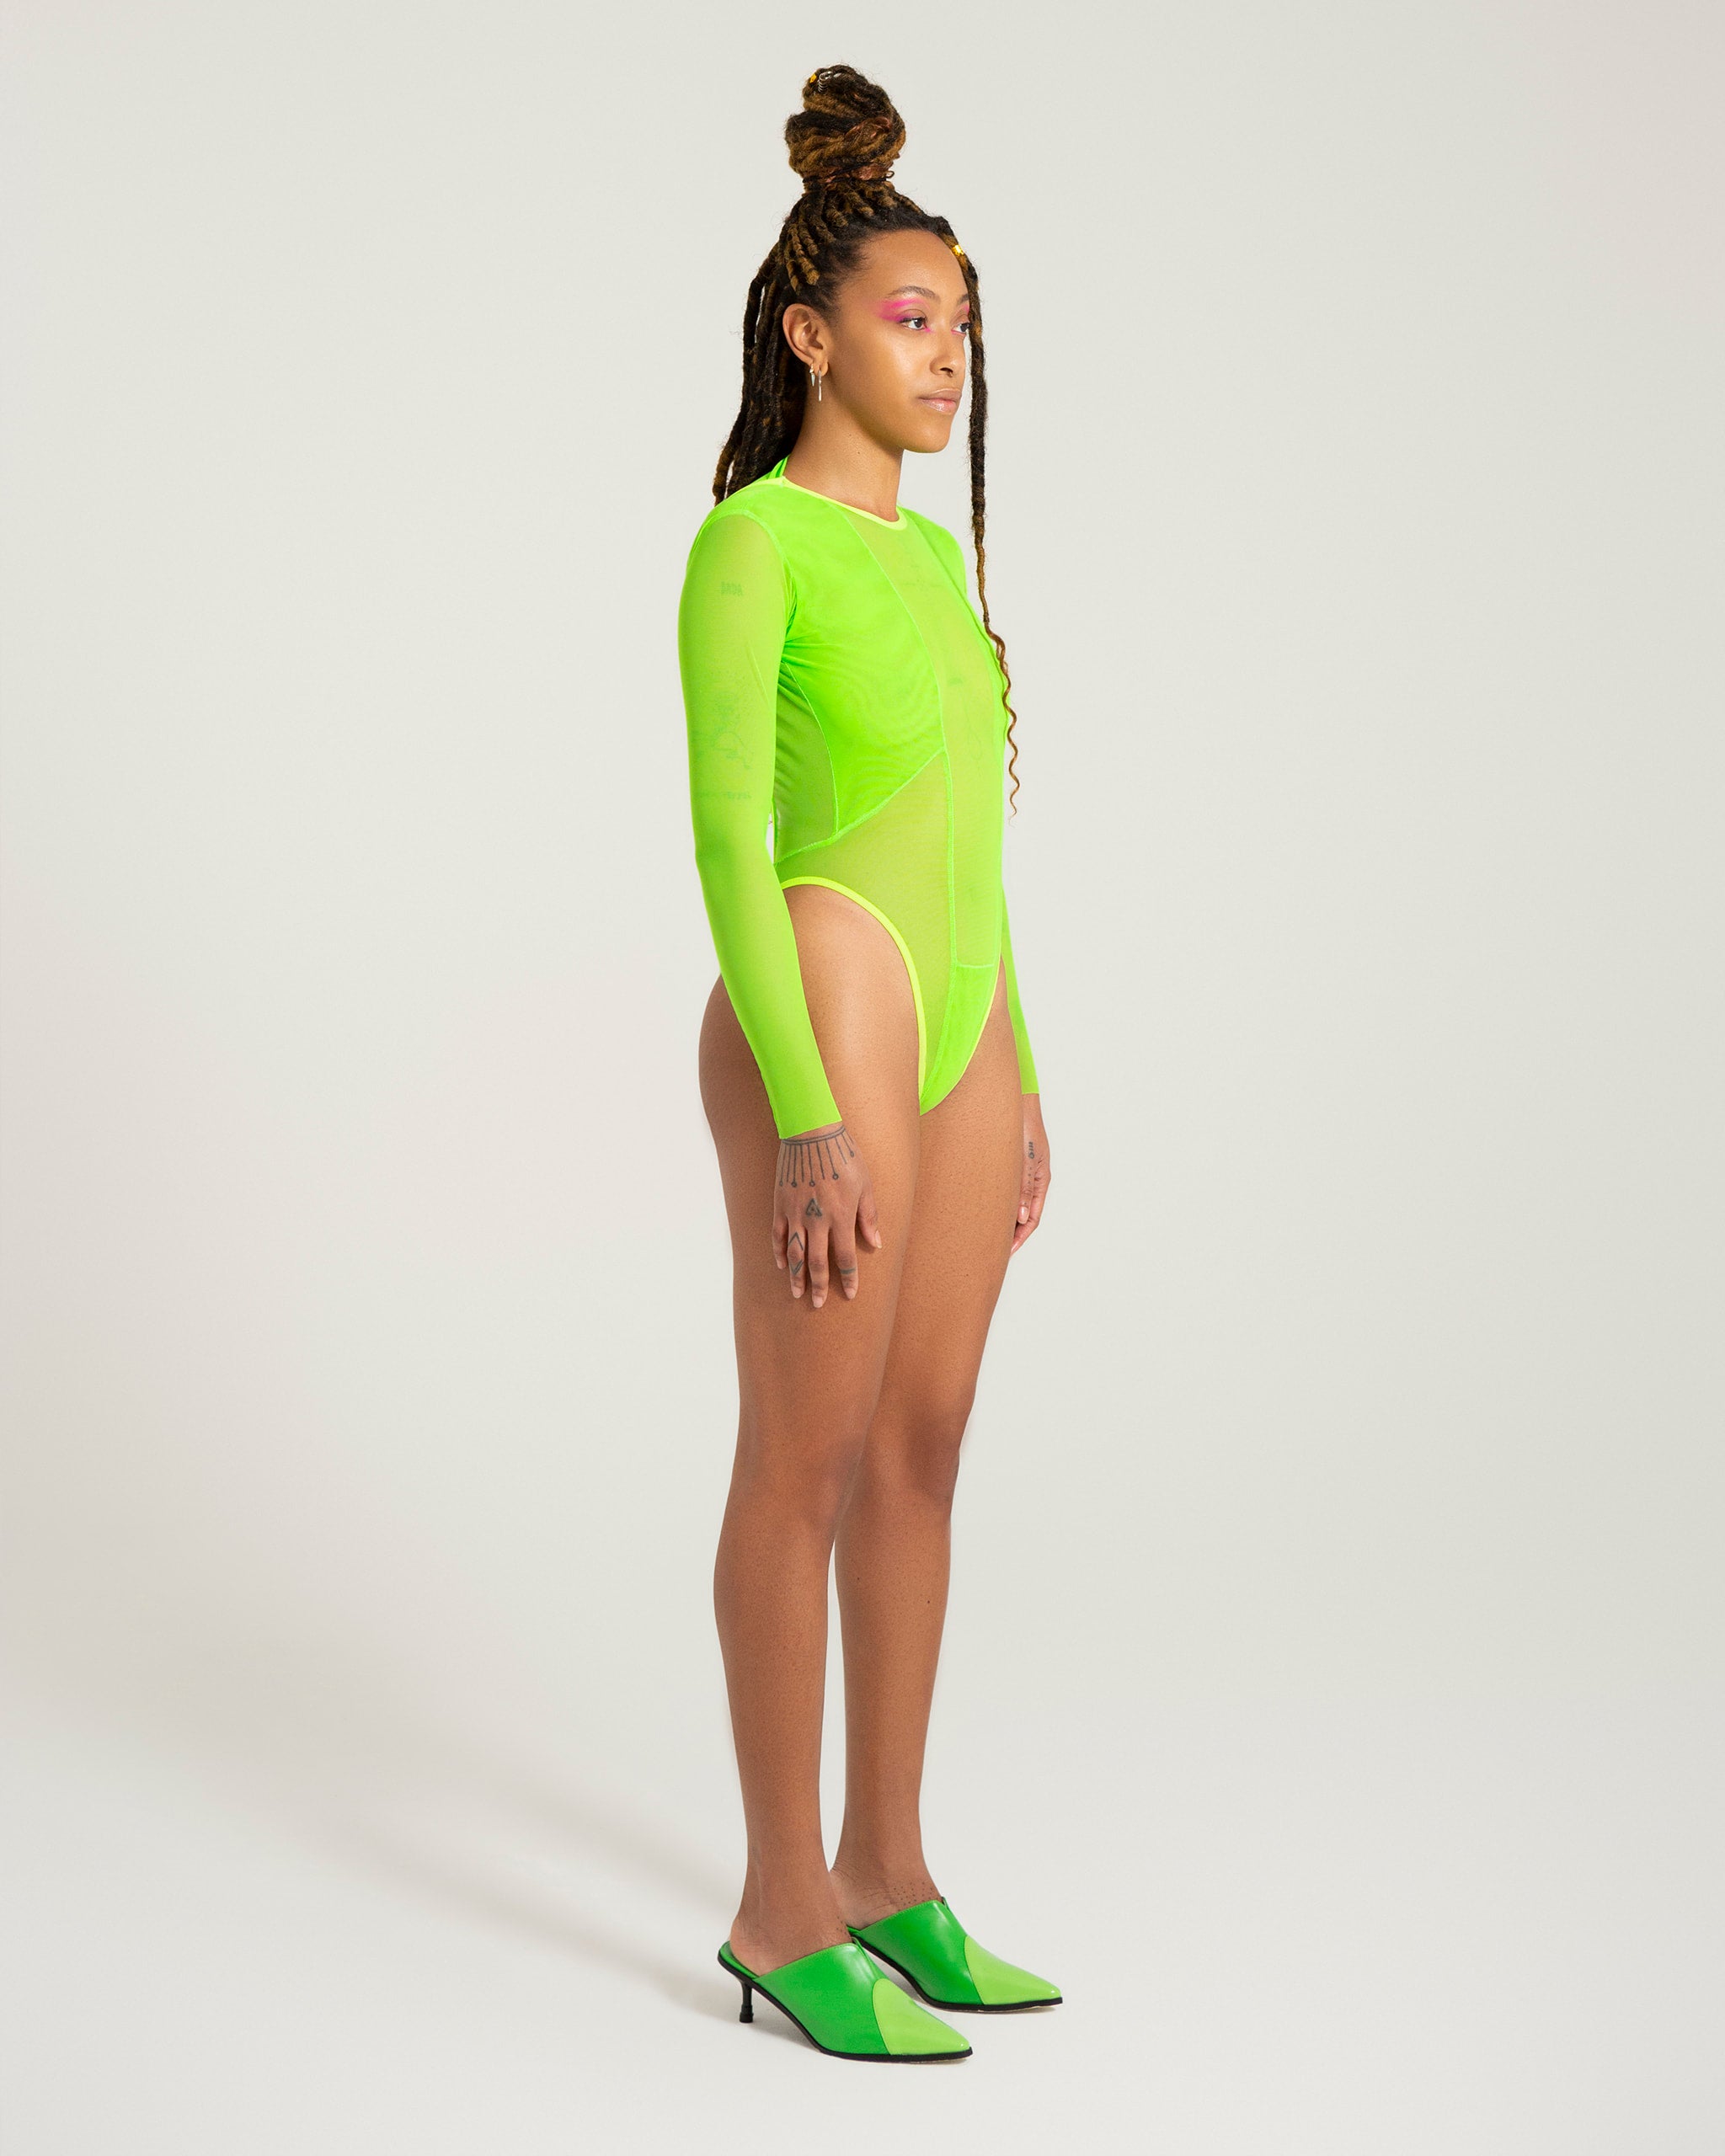 Neon Green Bodysuit, SAGA NYC